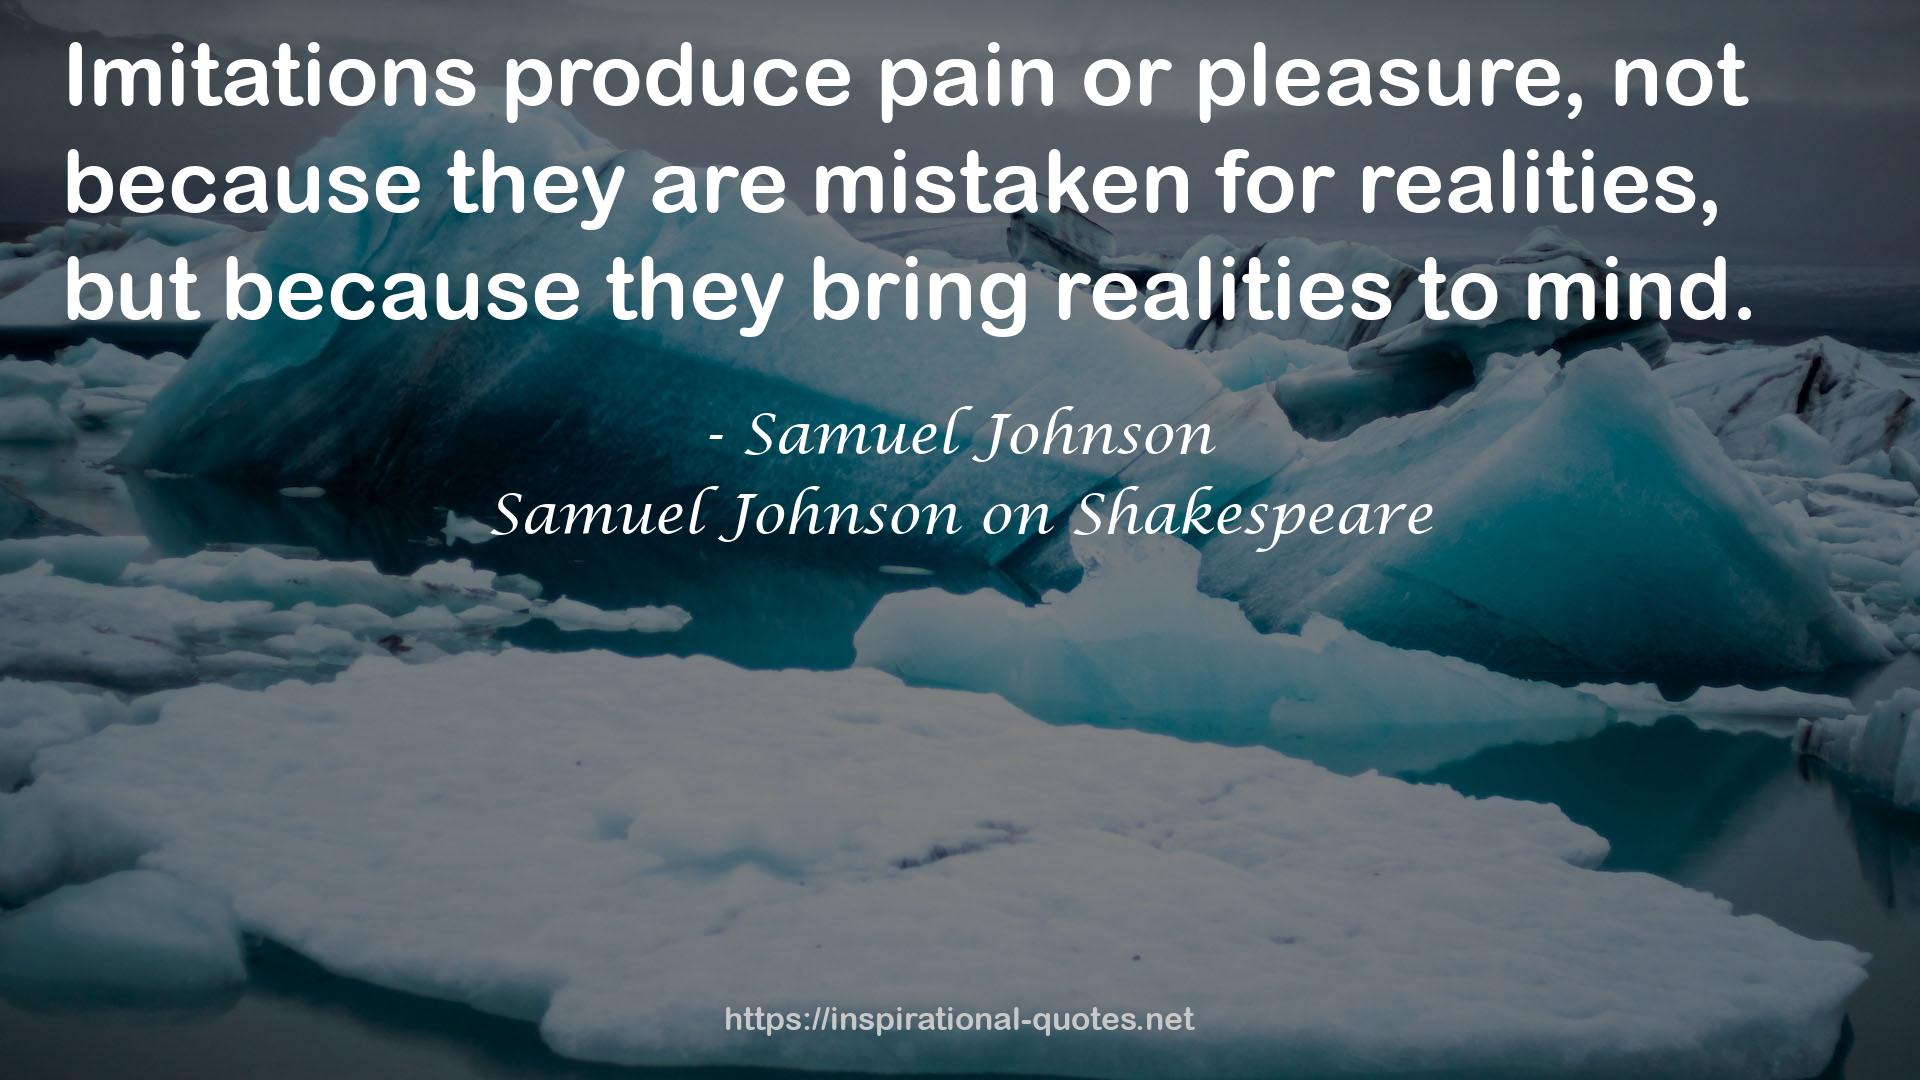 Samuel Johnson on Shakespeare QUOTES